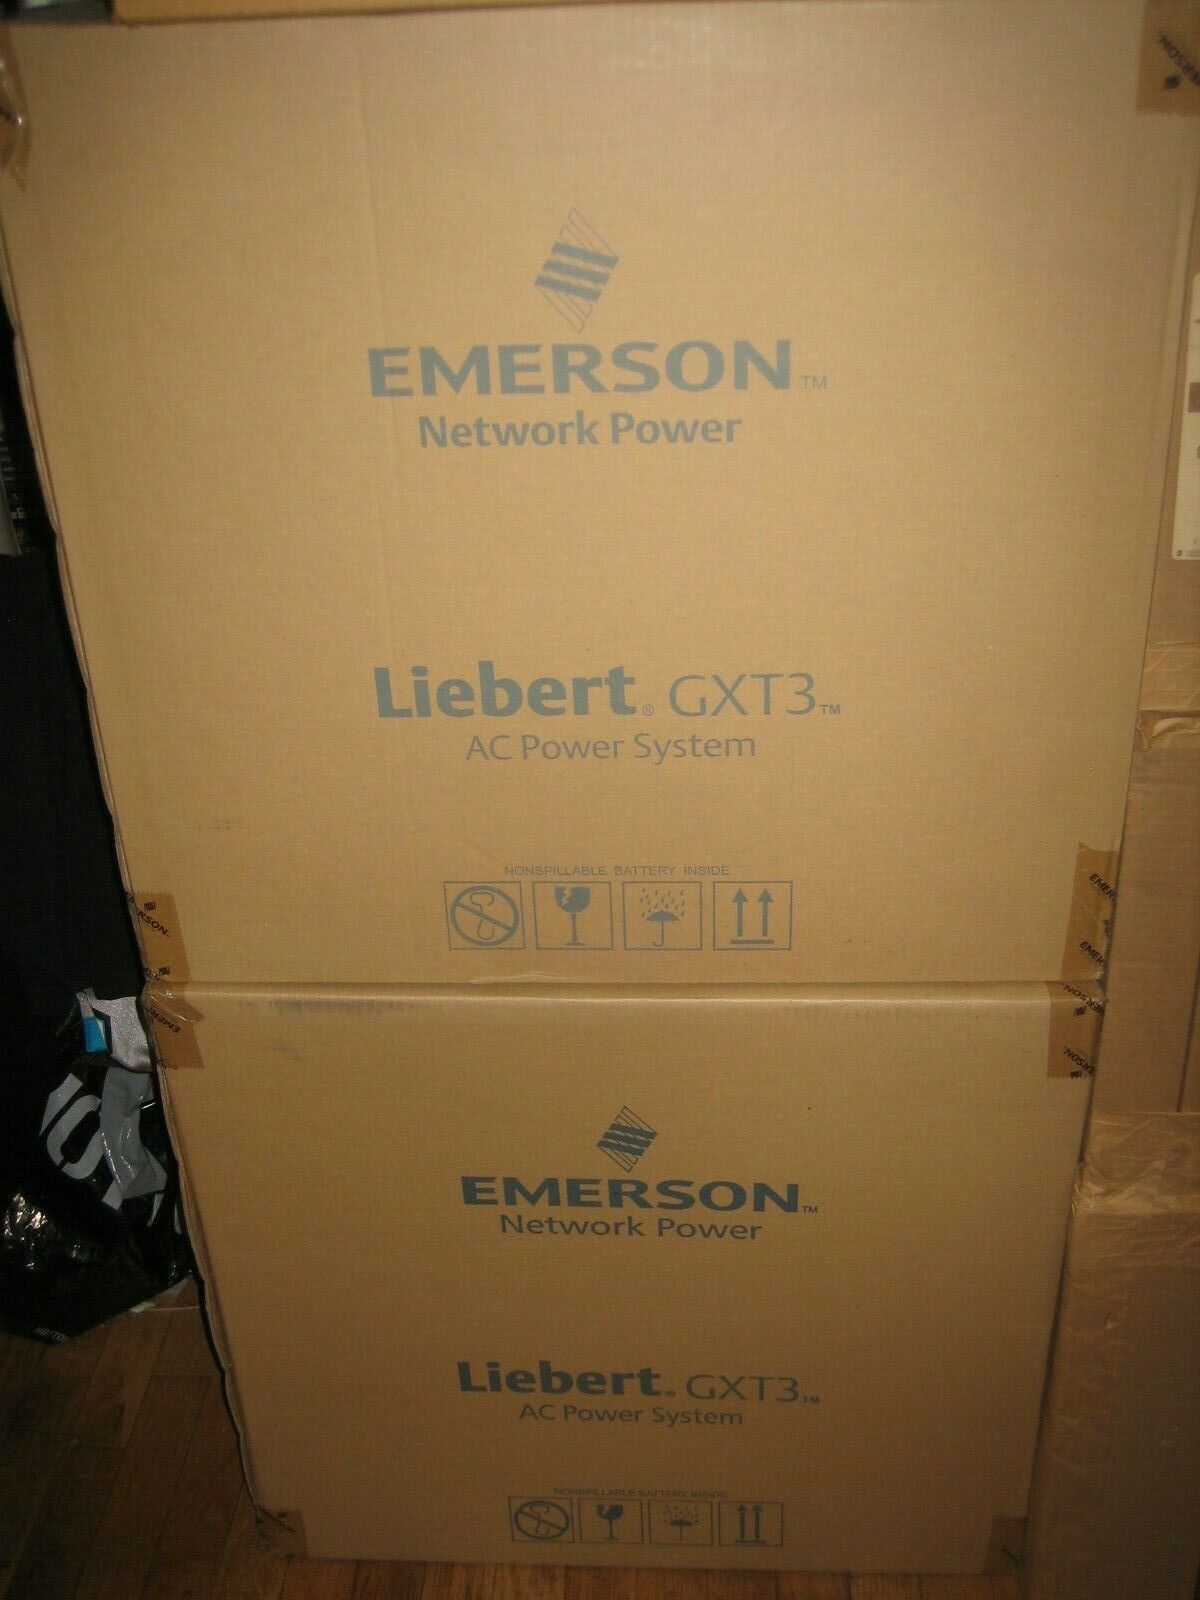 NEW IN BOX EMERSON NETWORK POWER LIEBERT GXT3-48VBATT AC POWER SYSTEM FM Radio